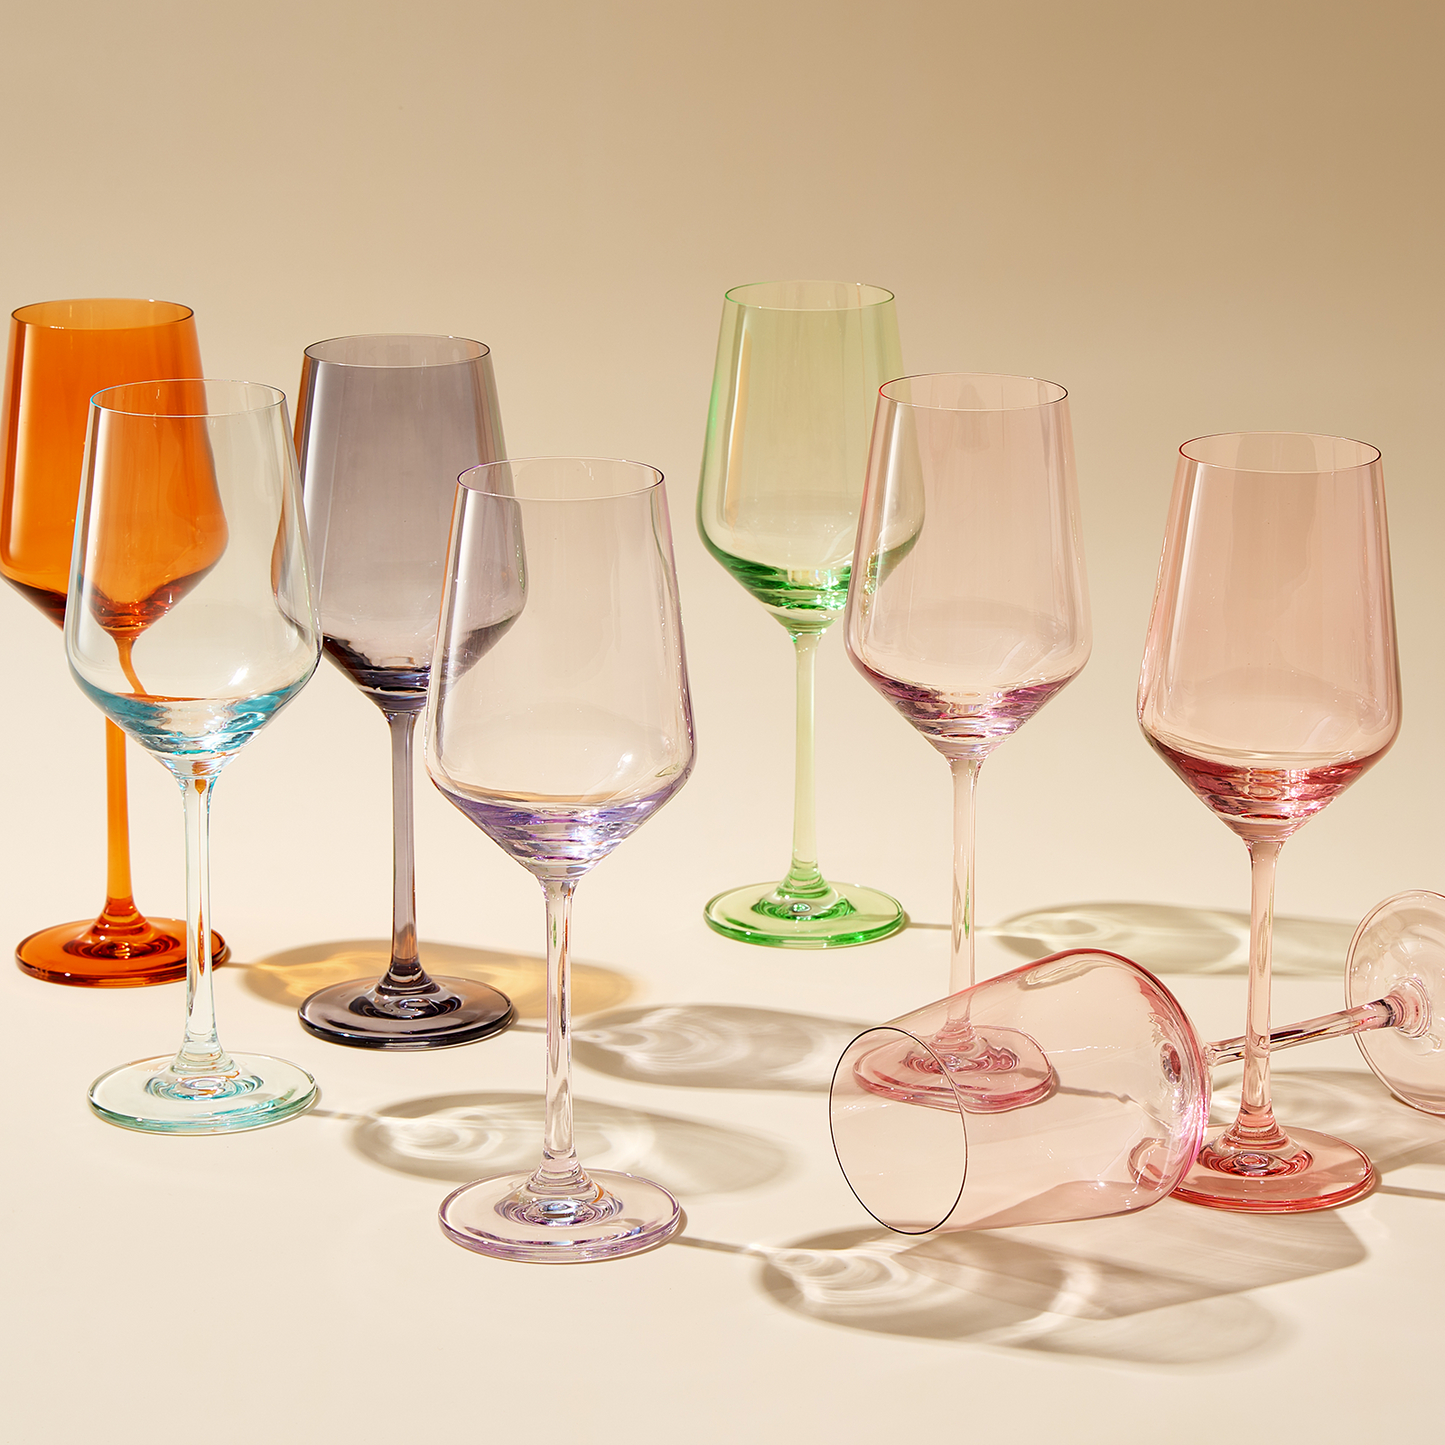 Rhea Wine Glassware, Set of 6, Purple